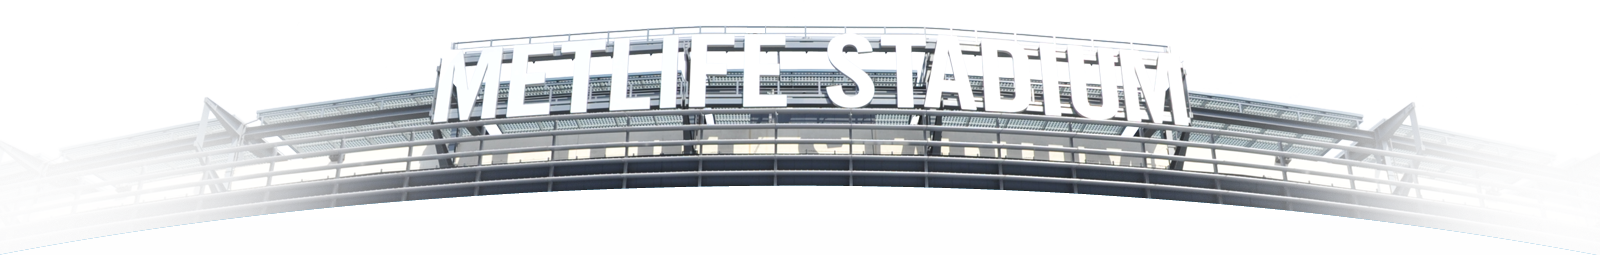 Official Website of MetLife Stadium, Home of Super Bowl 48, New York